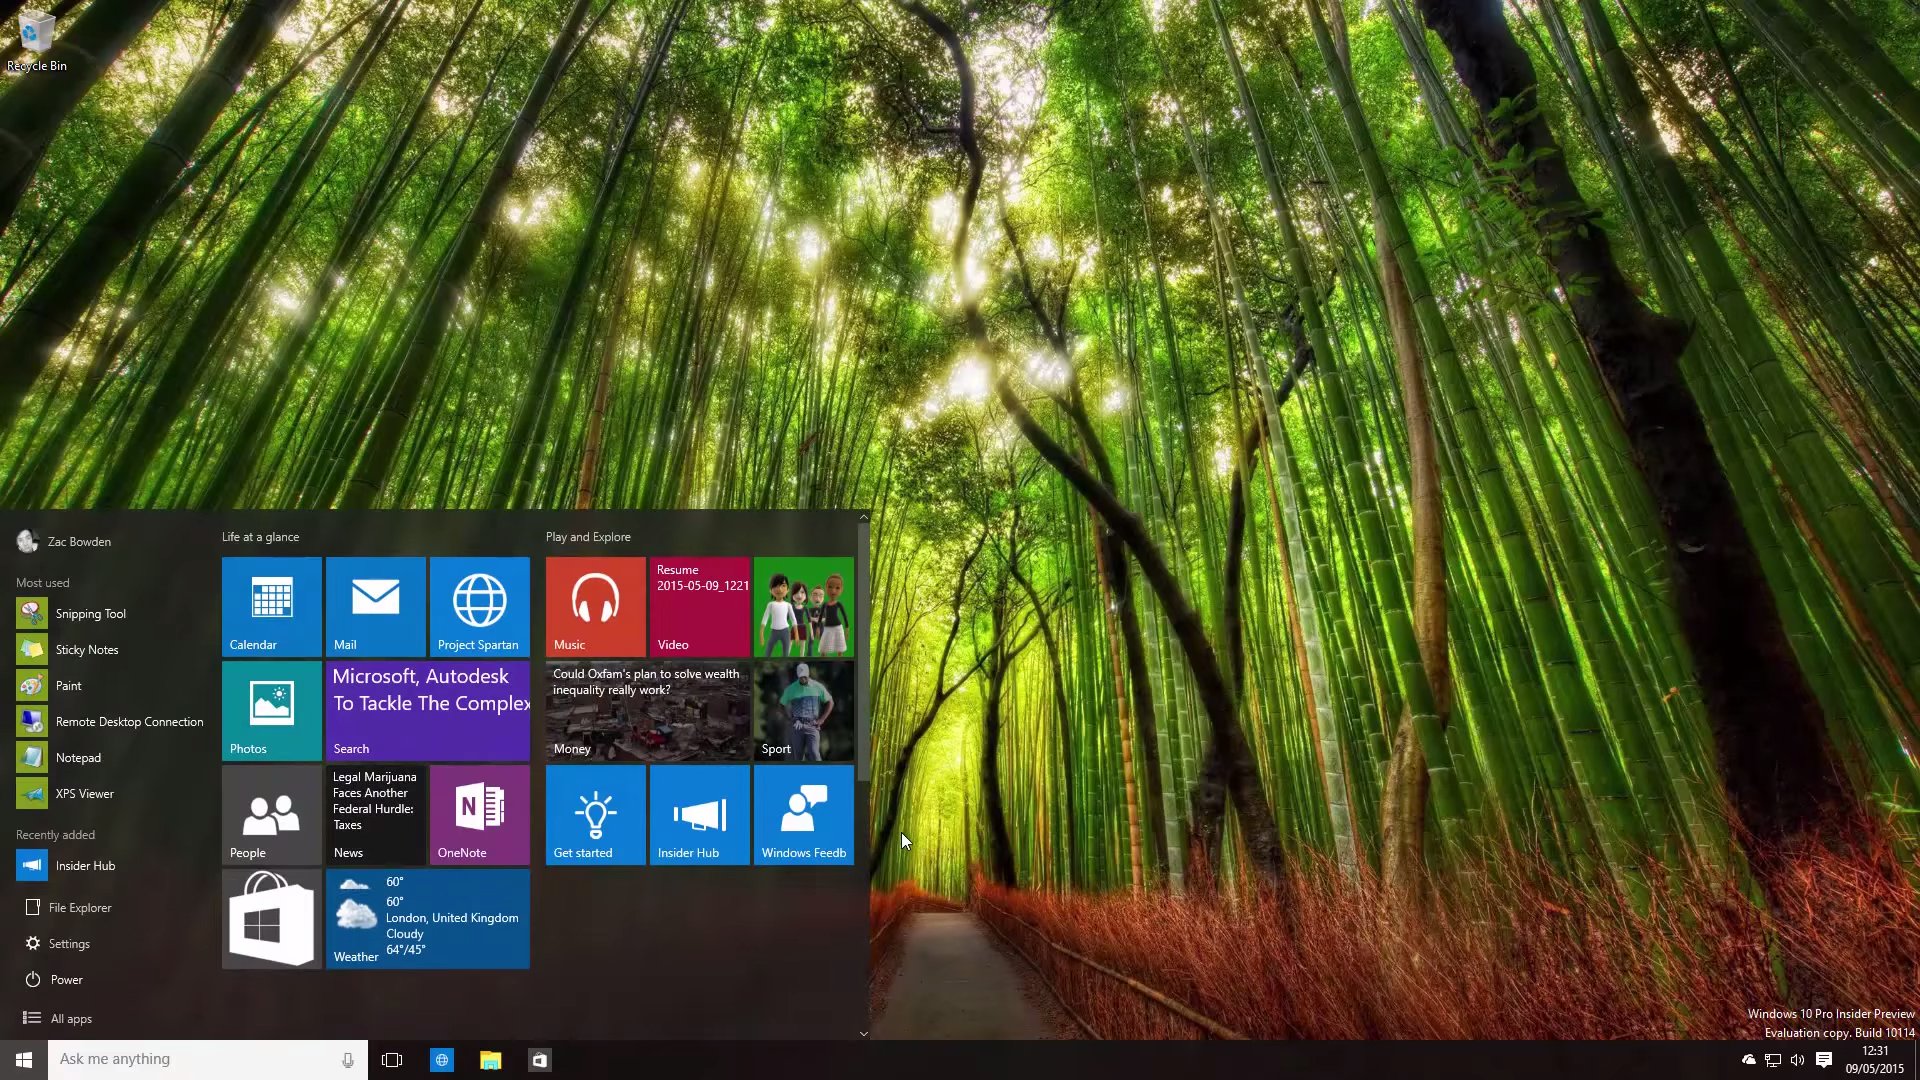 Windows 10 - Build 10114